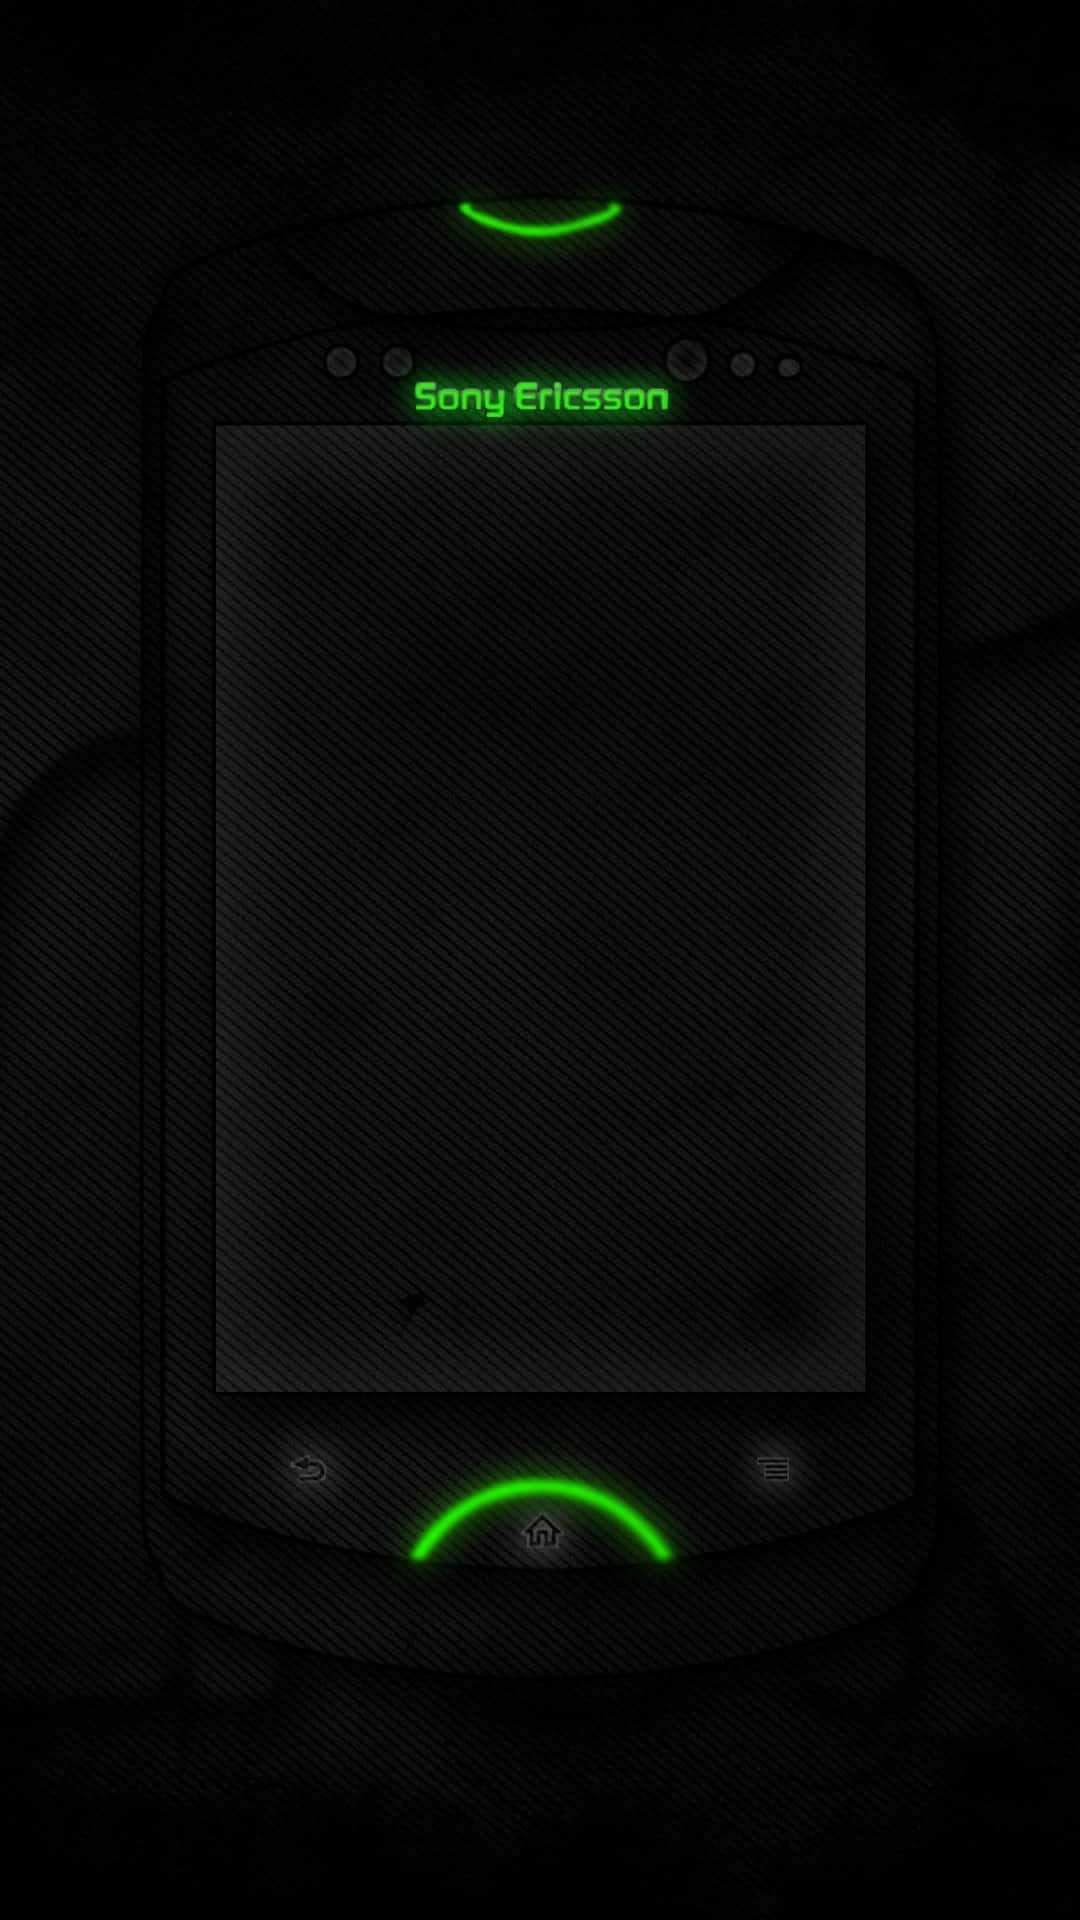 Sleek Green Phone on a Dark Background